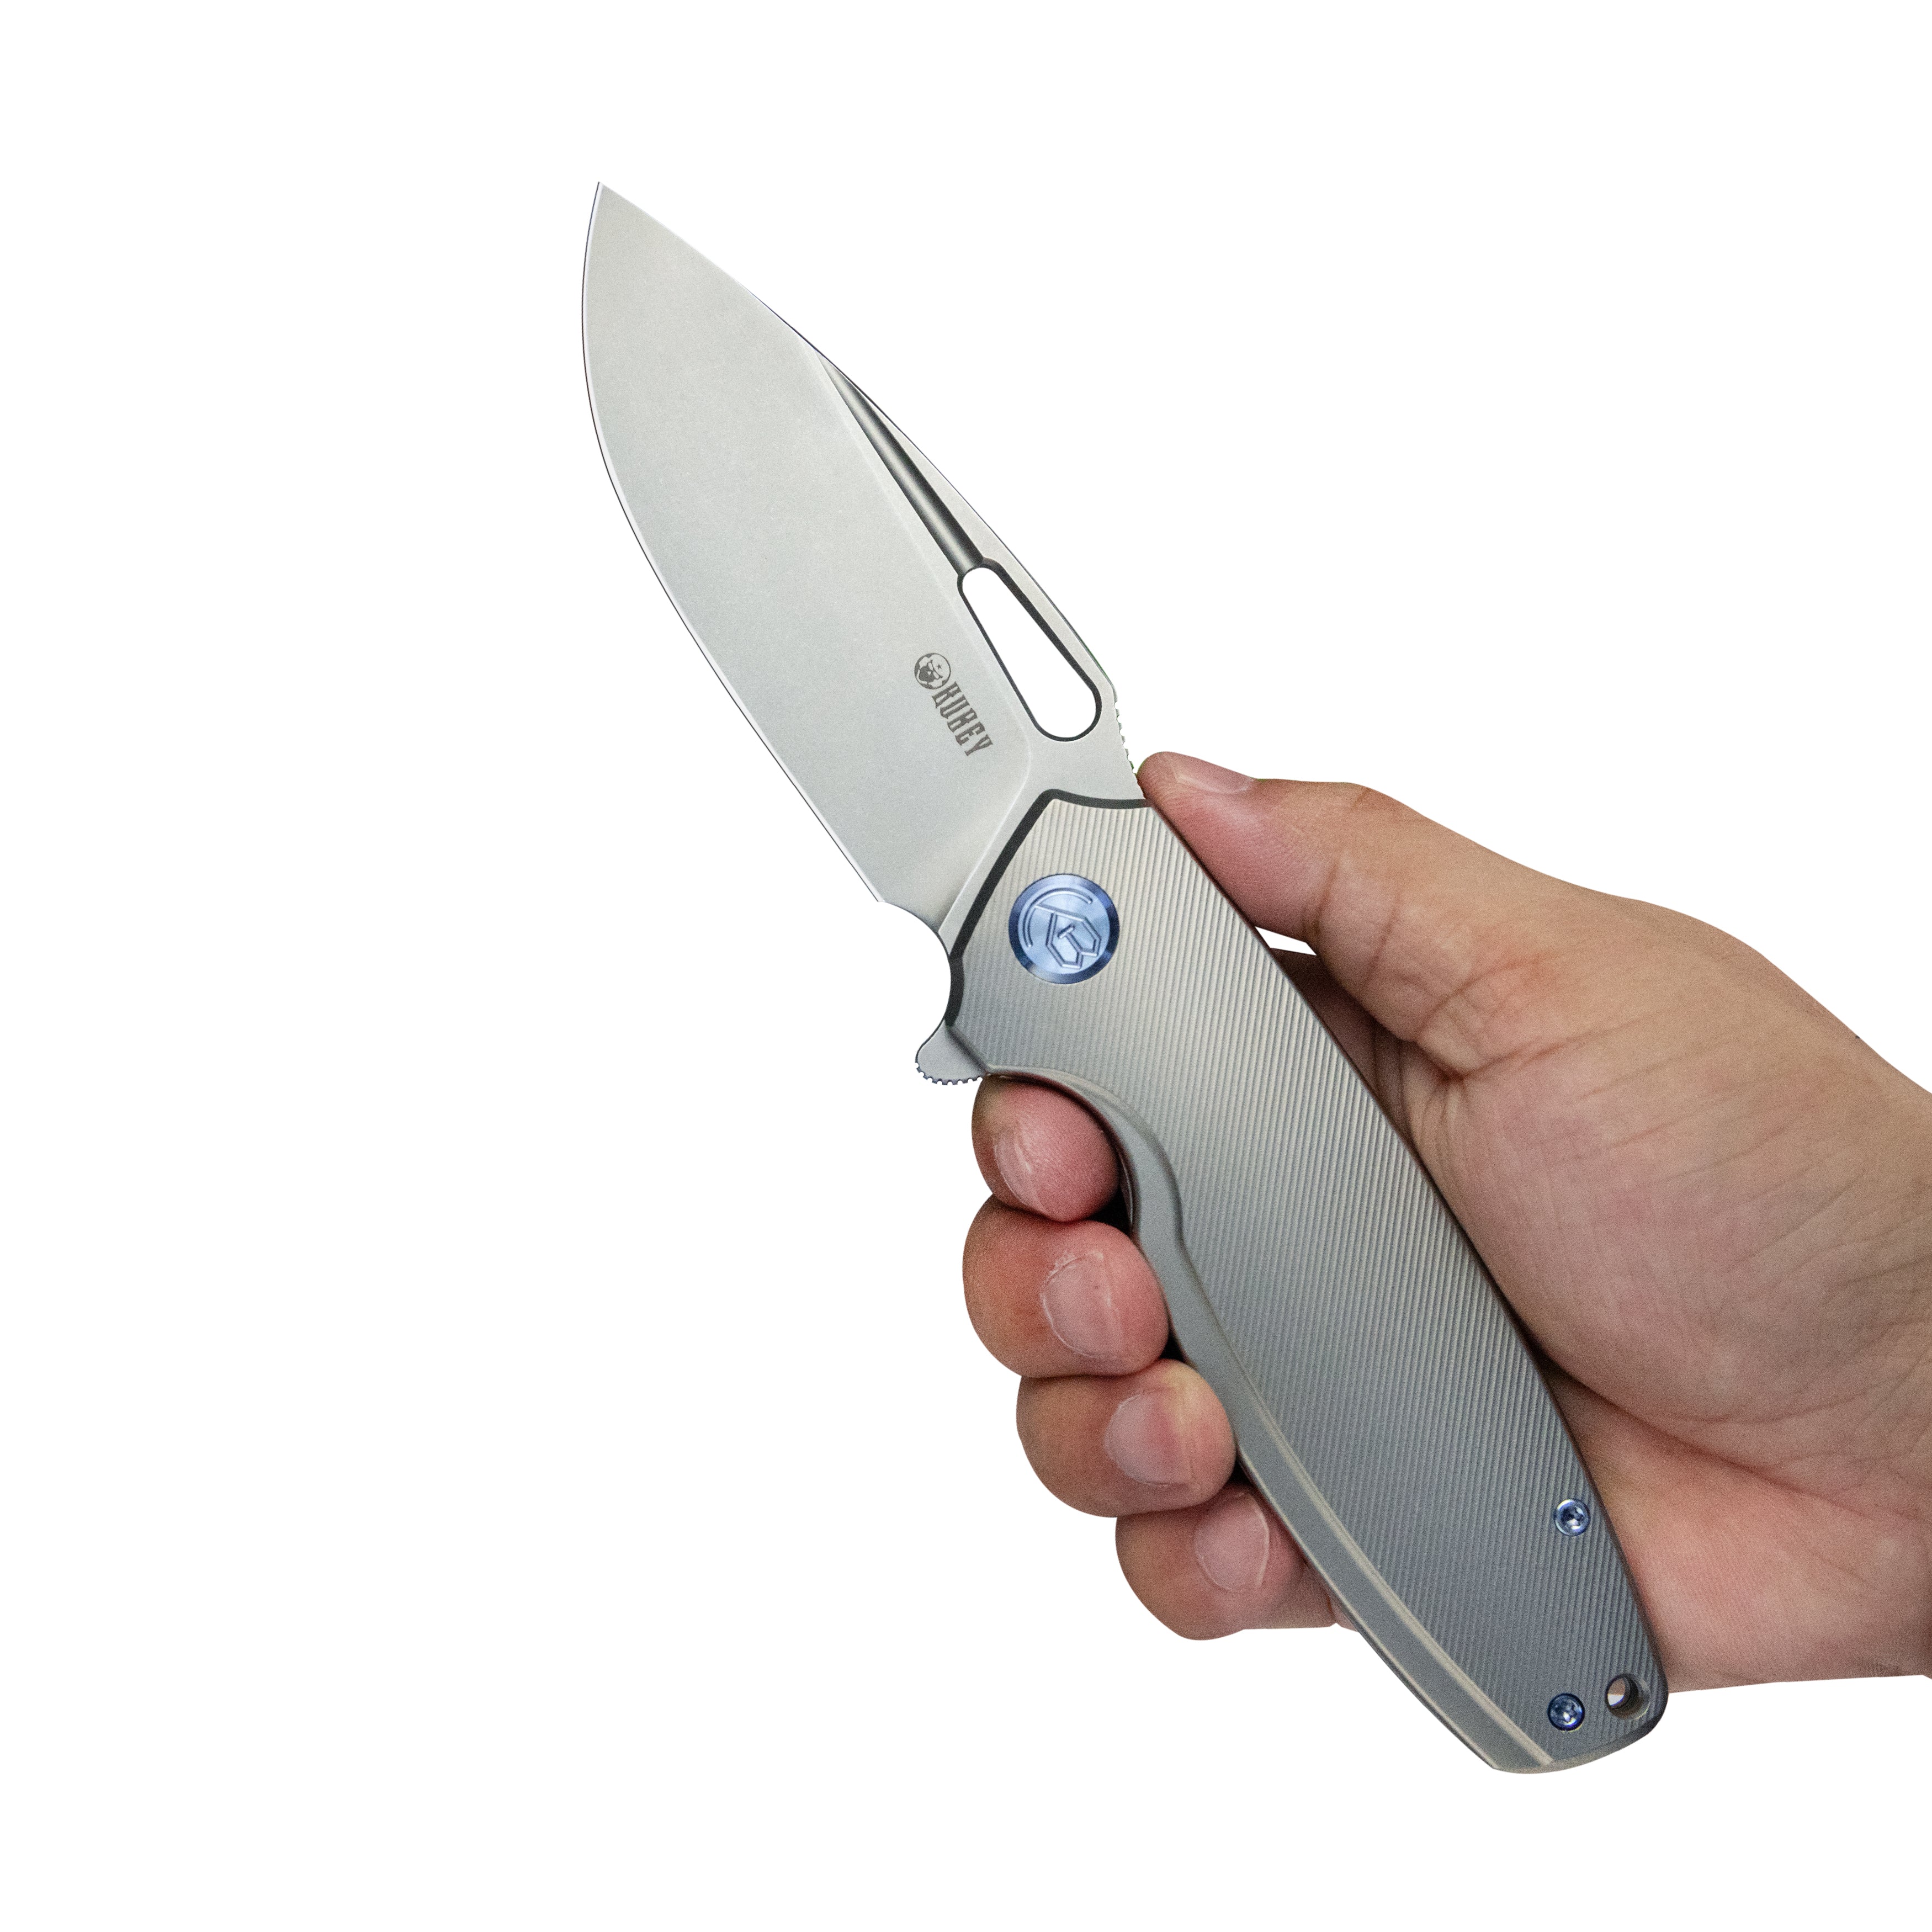 Kubey Tityus Frame Lock Flipper Folding Knife Gray 6AL4V Contoured Titanium Handle 3.39" Bead Blasted 14C28N KB360A